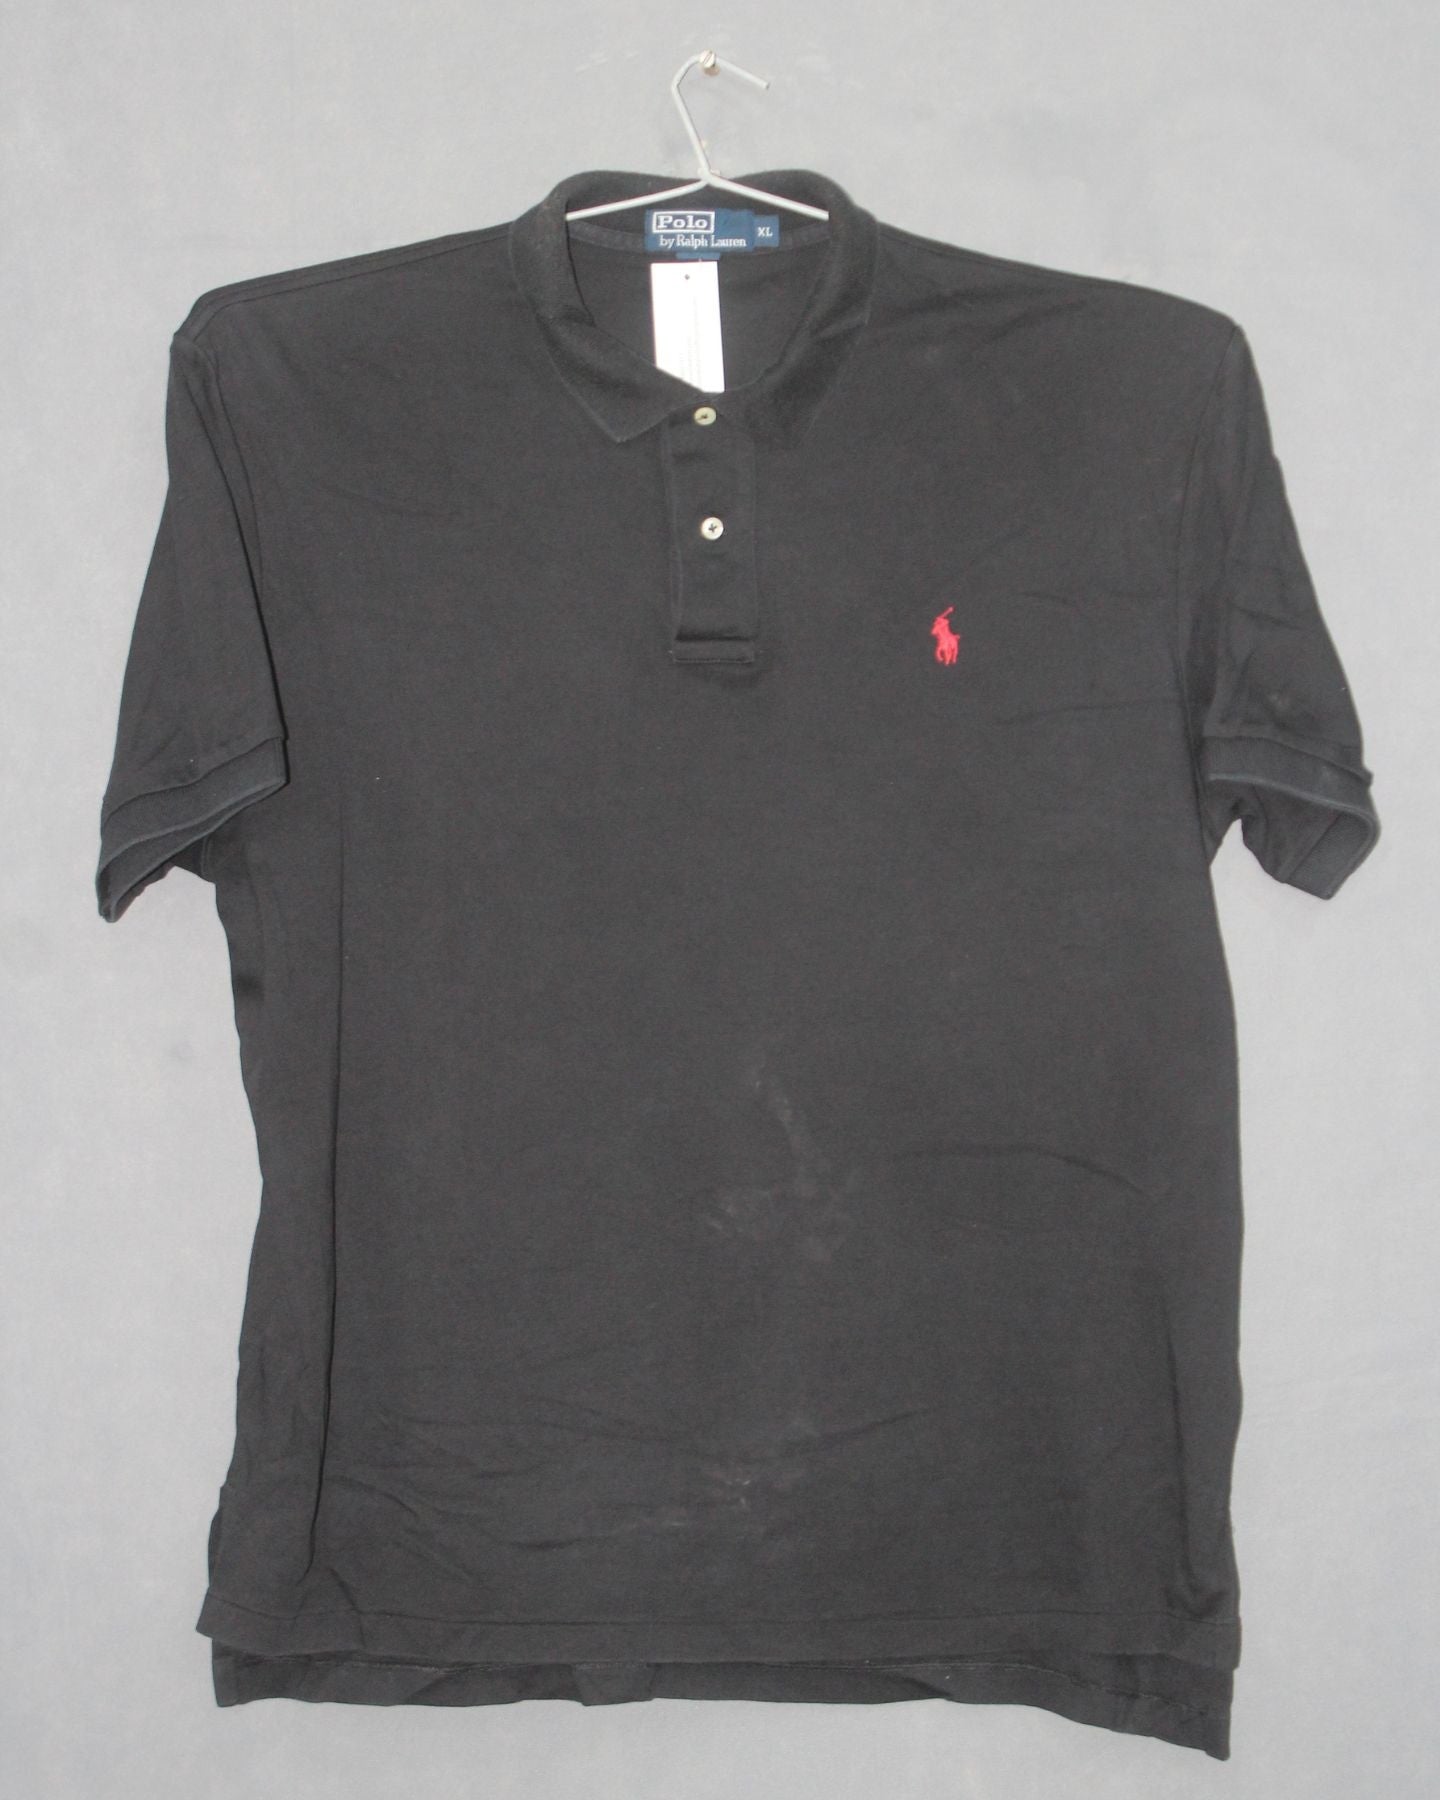 Polo Ralph Lauren Branded Original Cotton Polo T Shirt For Men